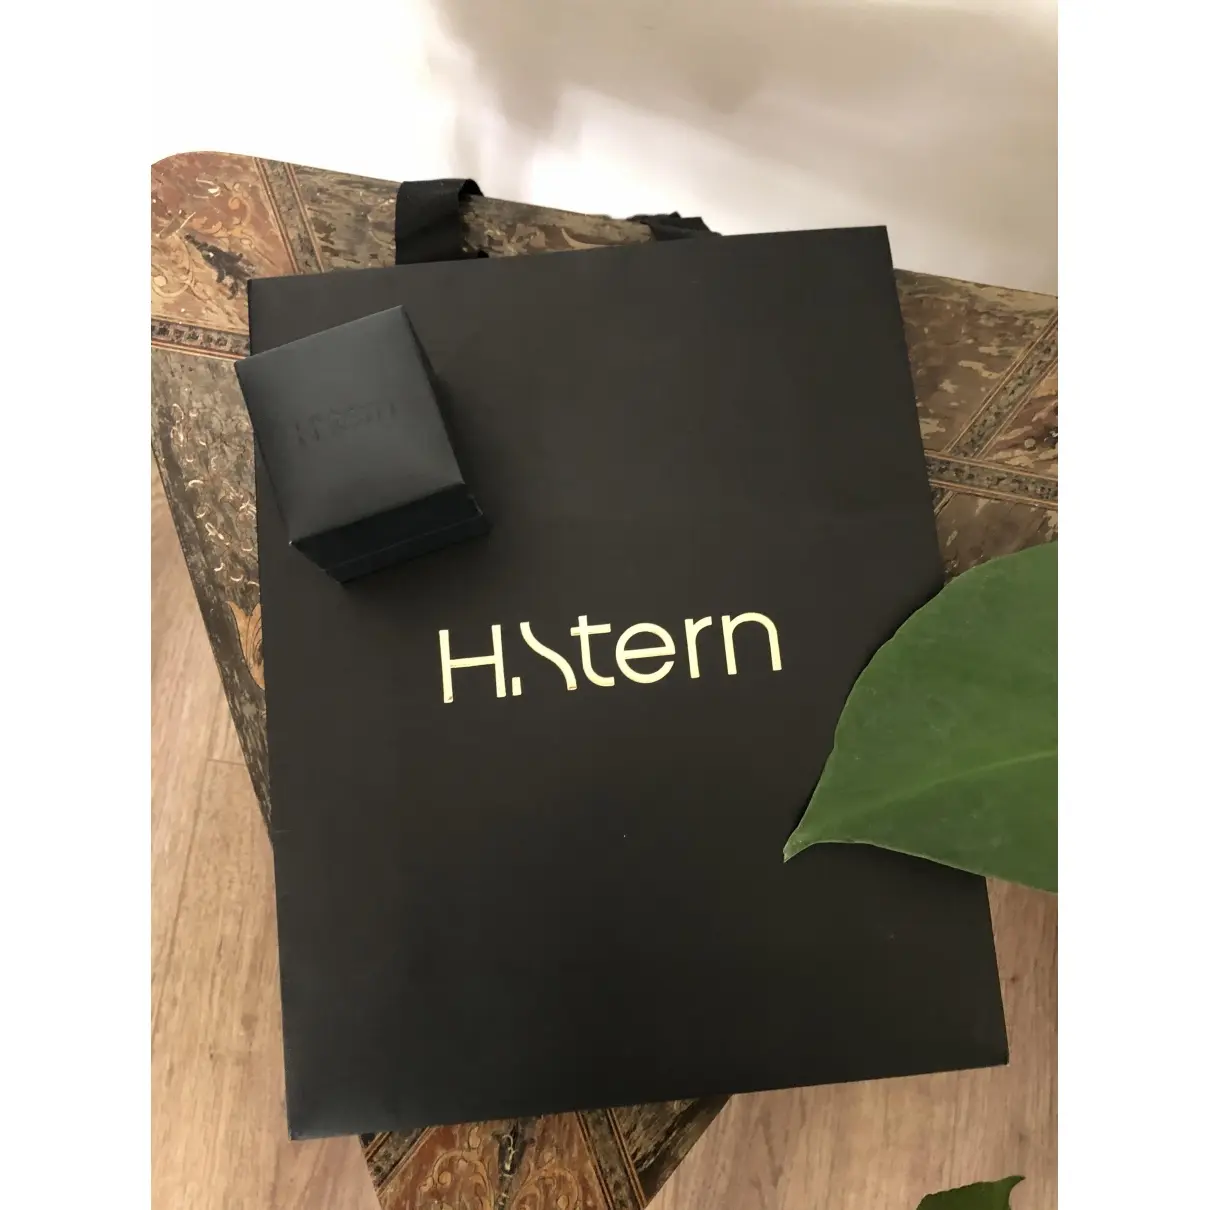 Buy H. Stern Silver ring online